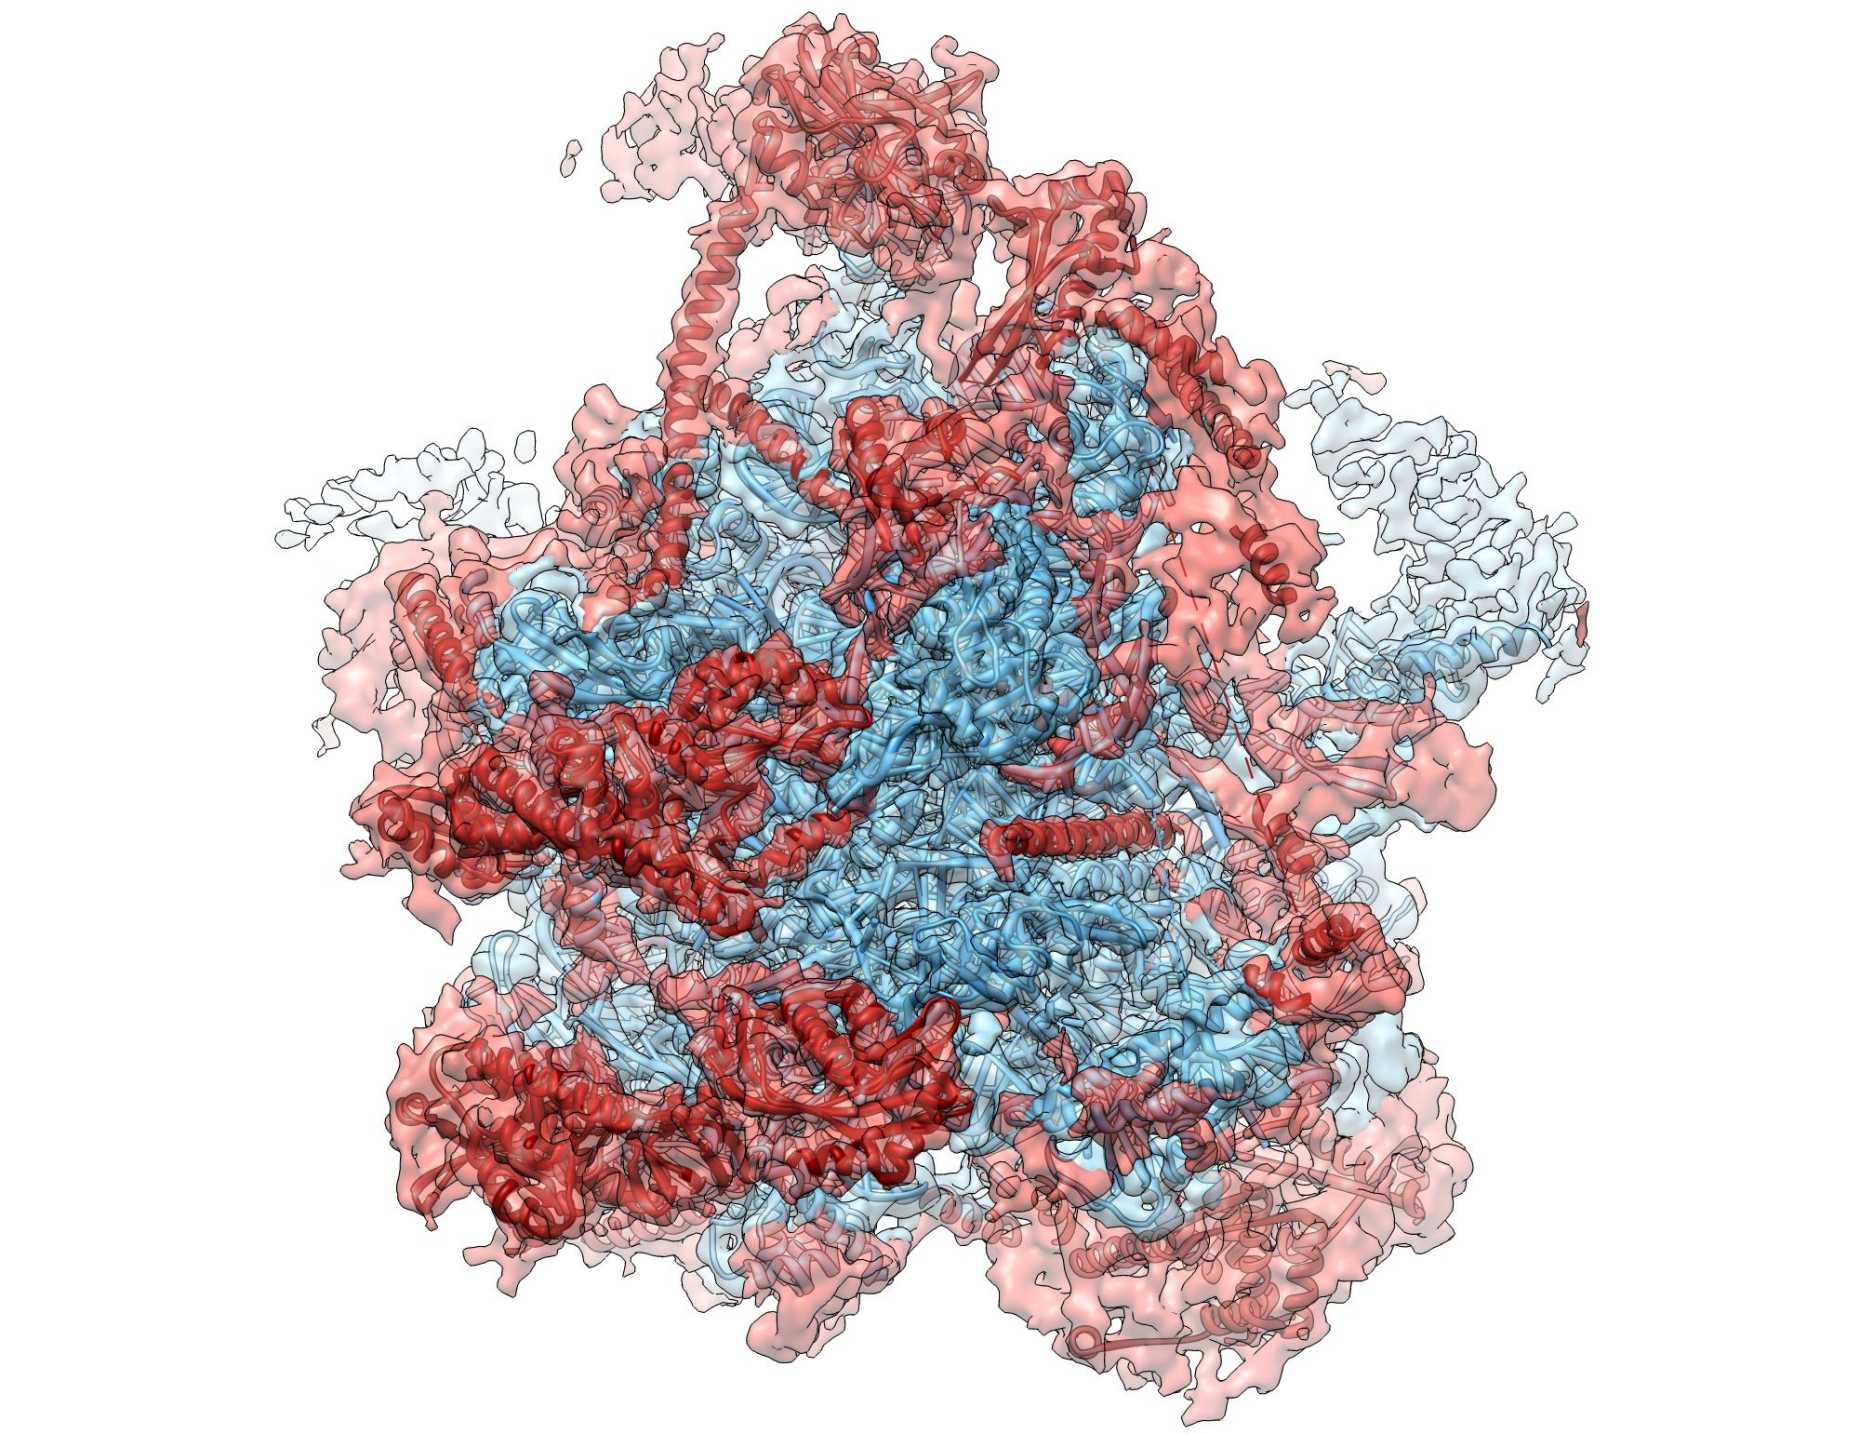 Enlarged view: ribosom